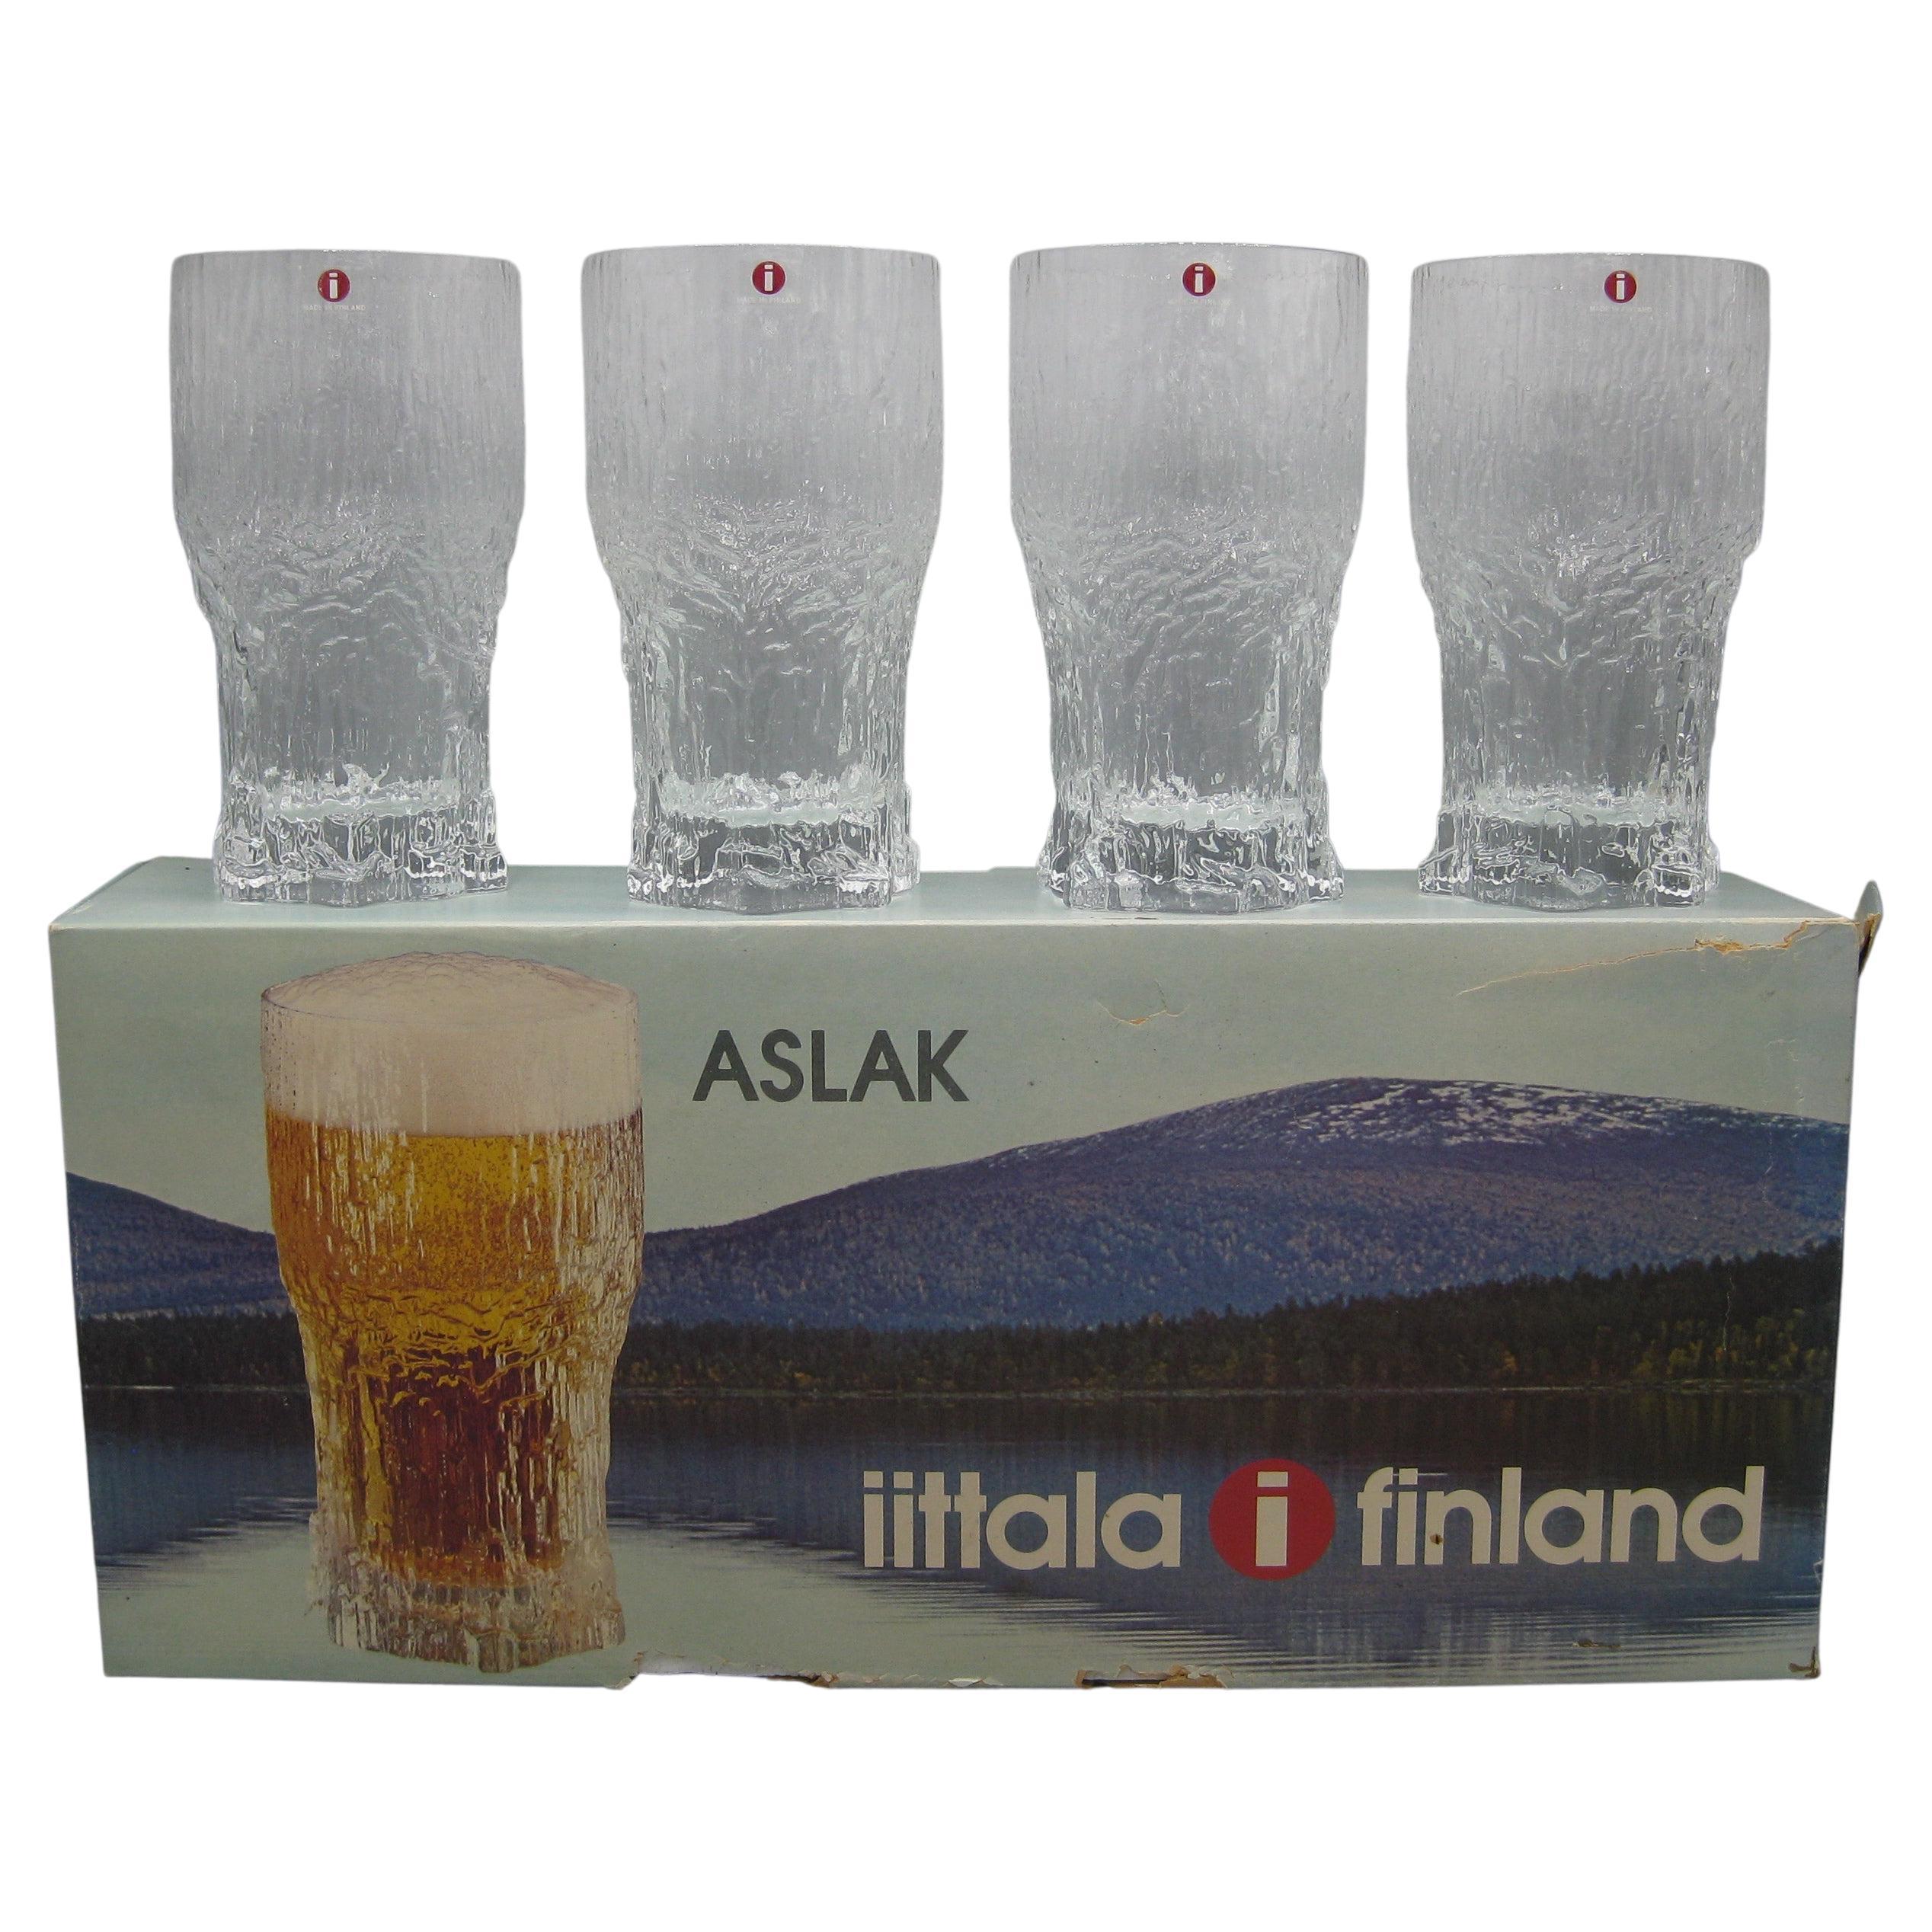 4 Iittala of Finland Aslak Tapio Wirkkala Beer Glasses New in Box 60's VW Promo For Sale